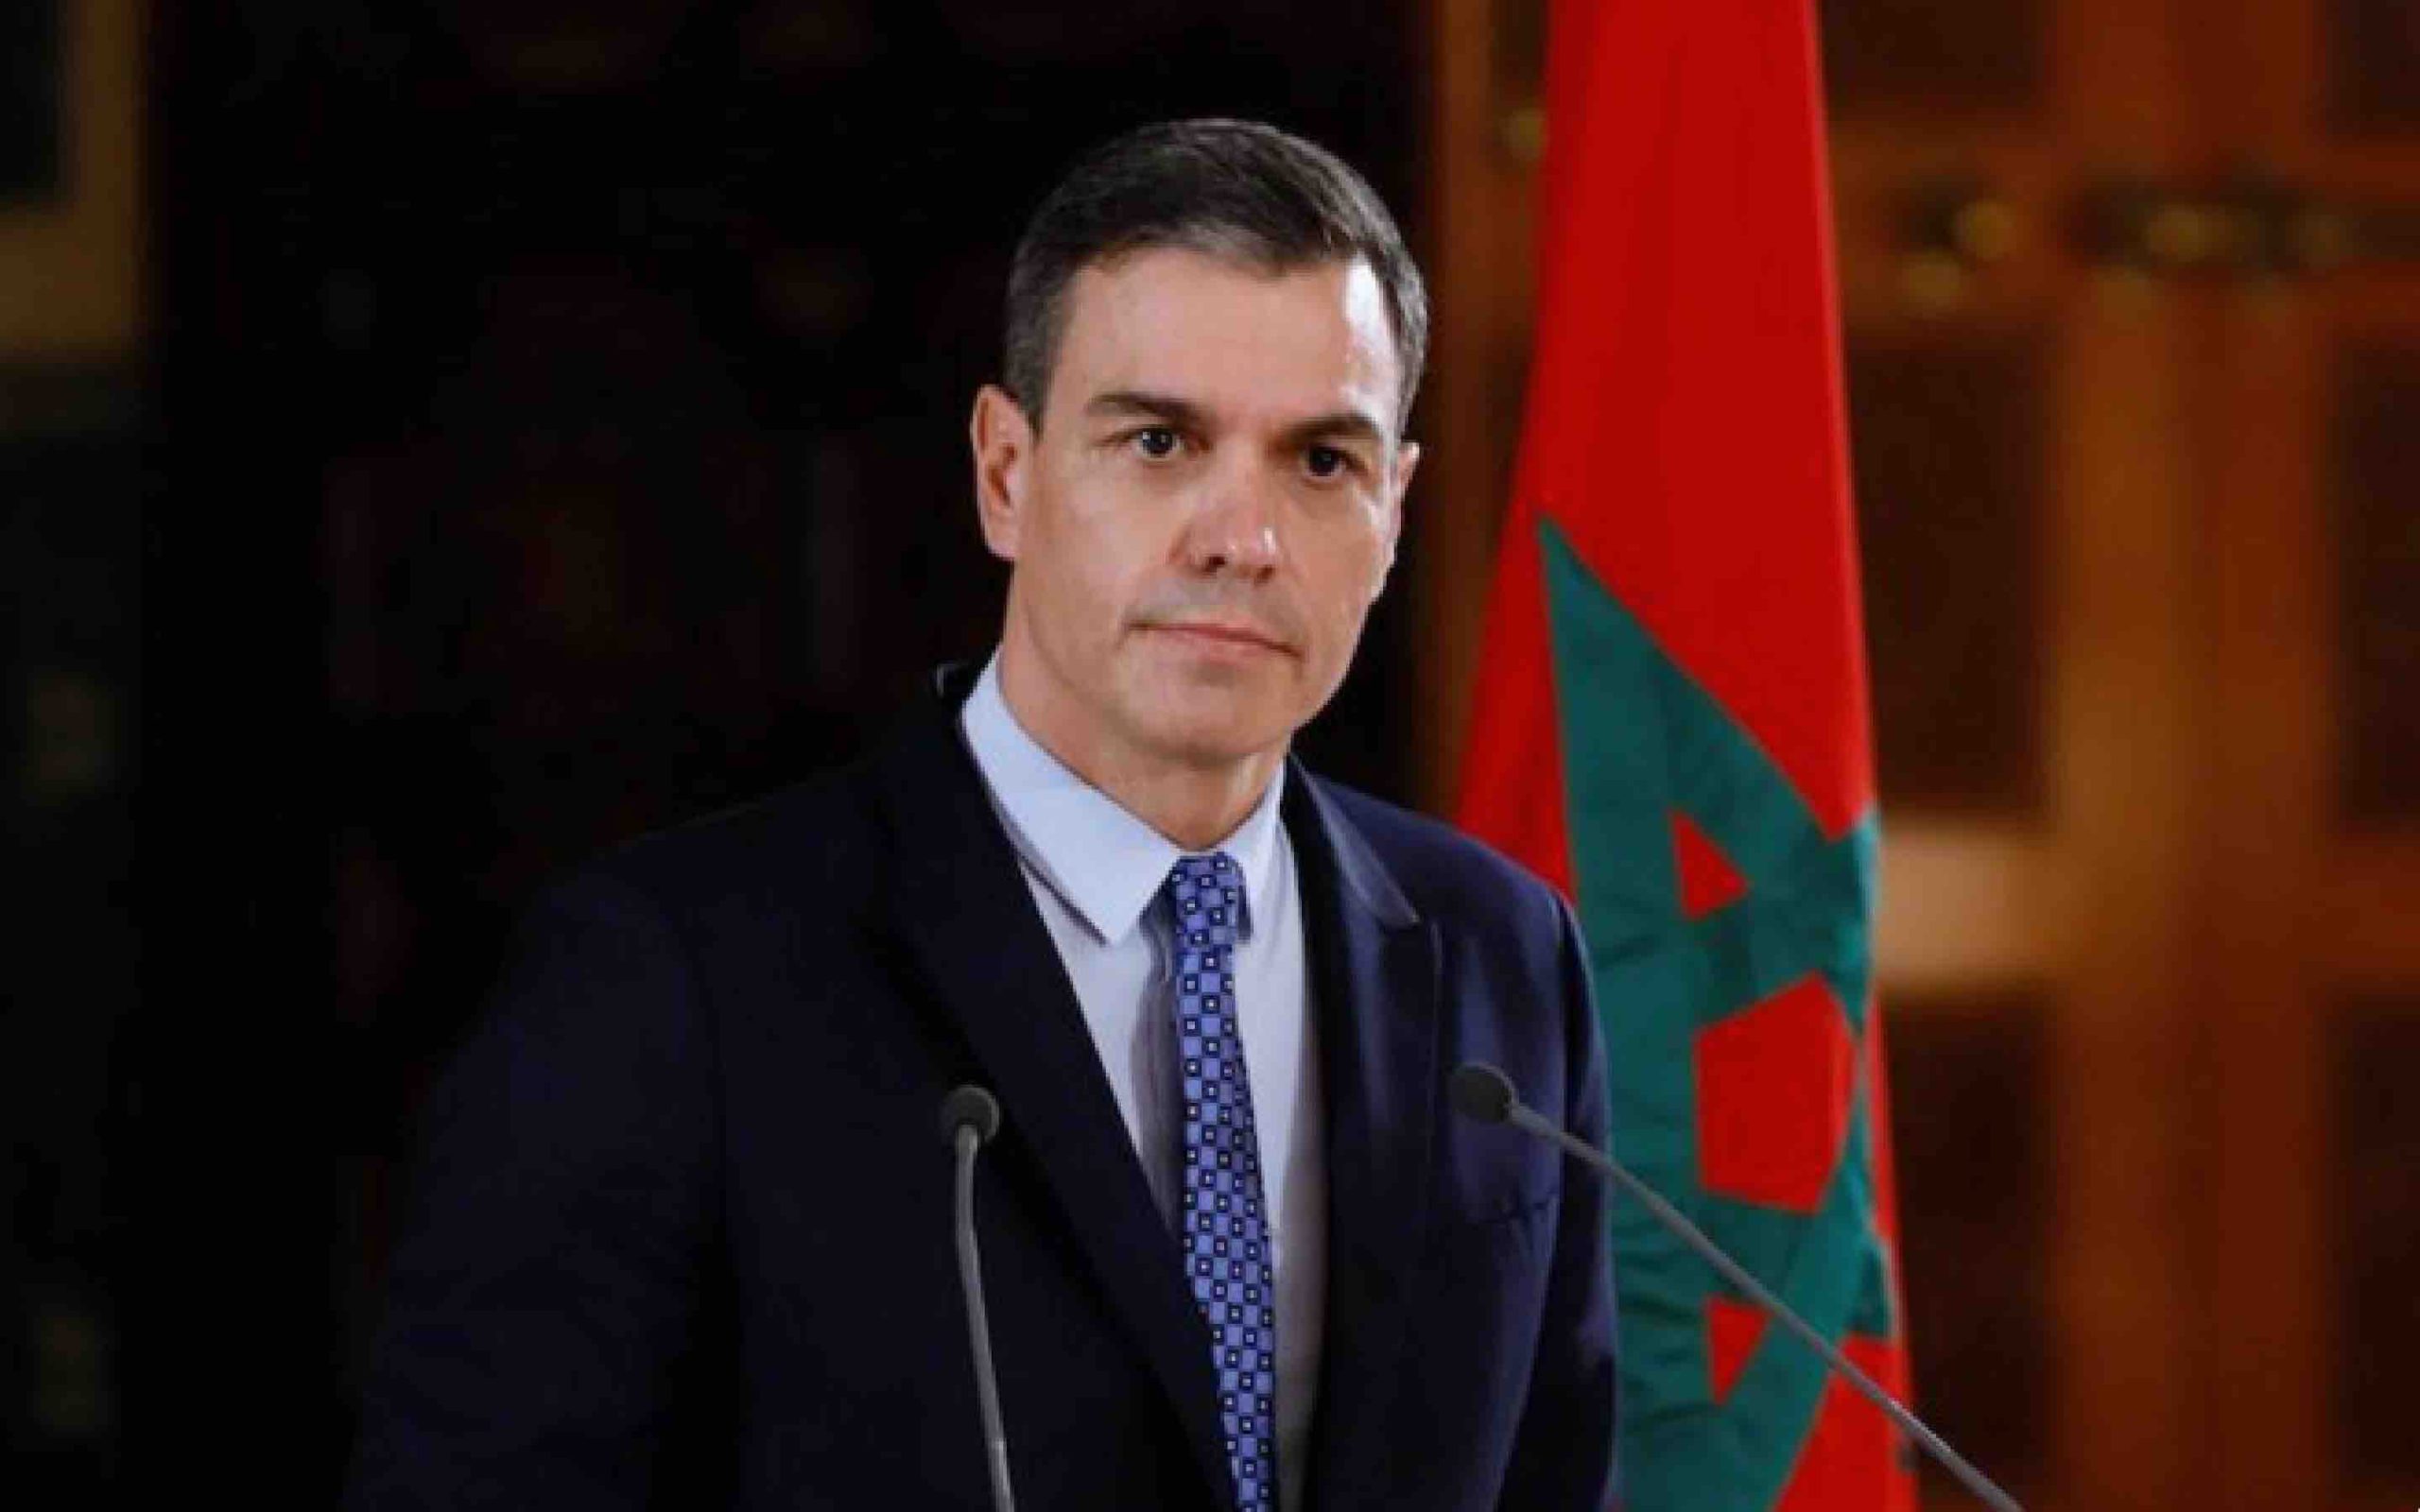 Pedro Sánchez Maroc Morocco Espagne Spain